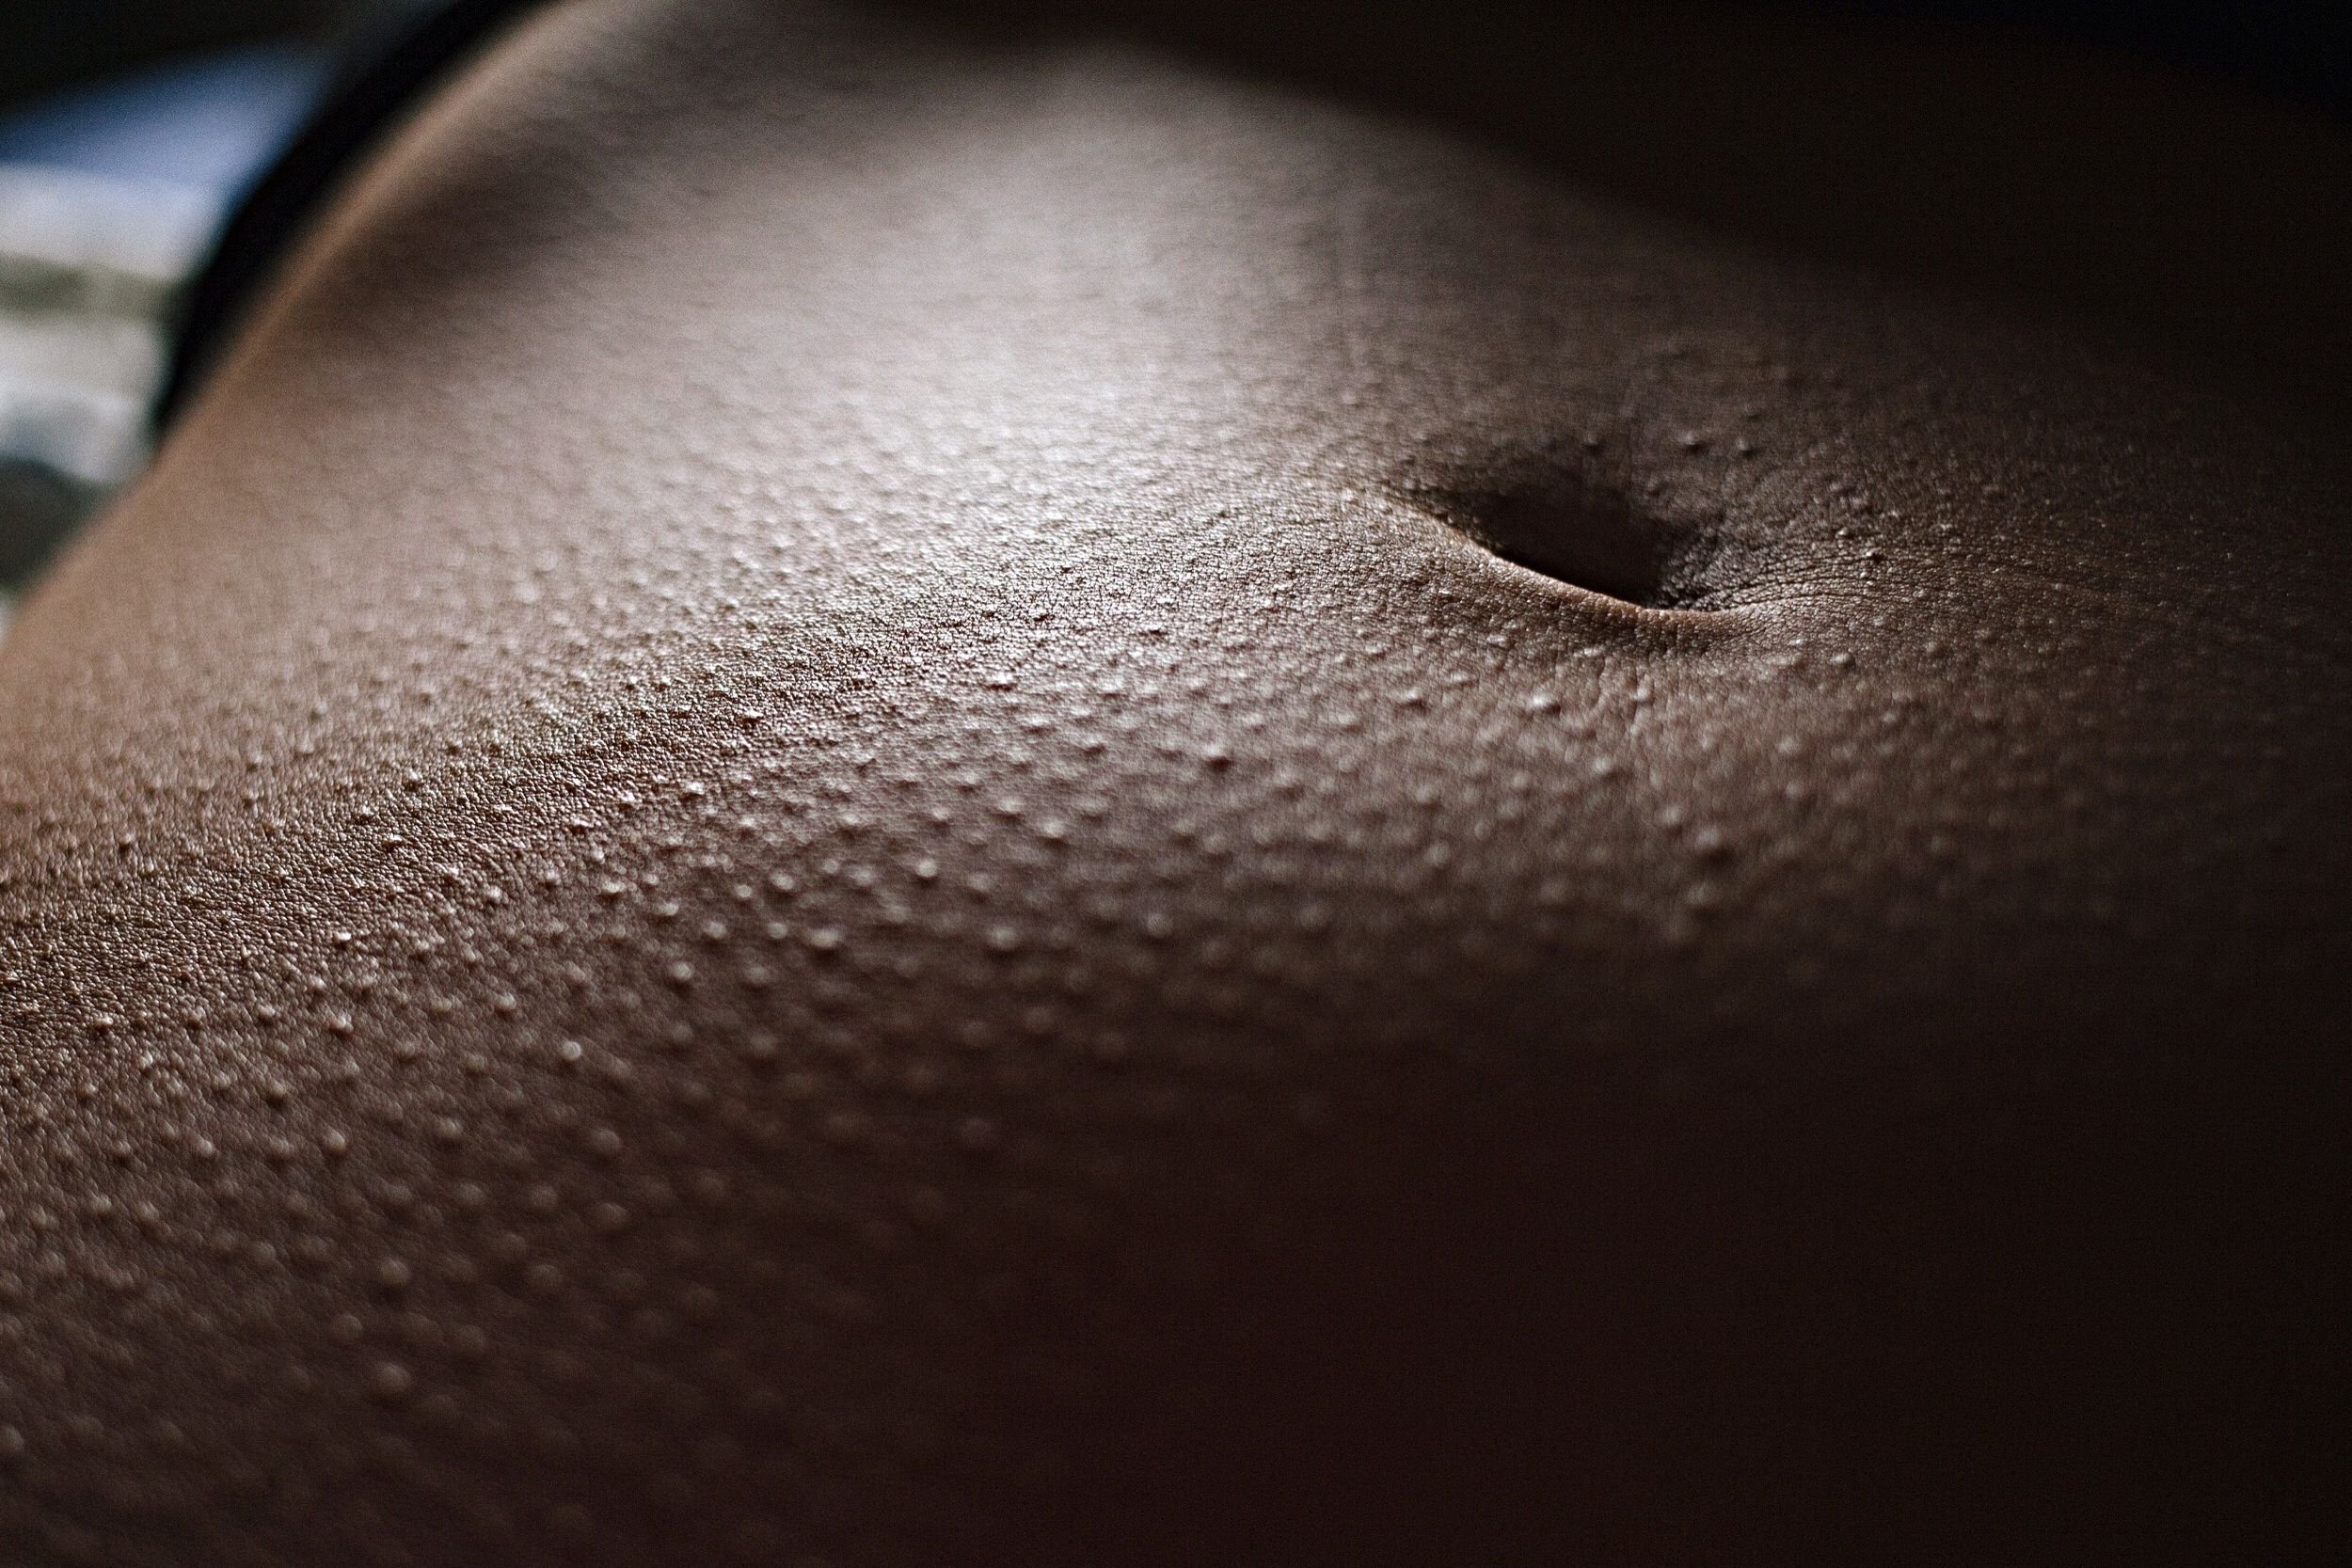 Up close 3. Фолликулярный Каритас. Женское тело в мурашках. Мурашки на коже.